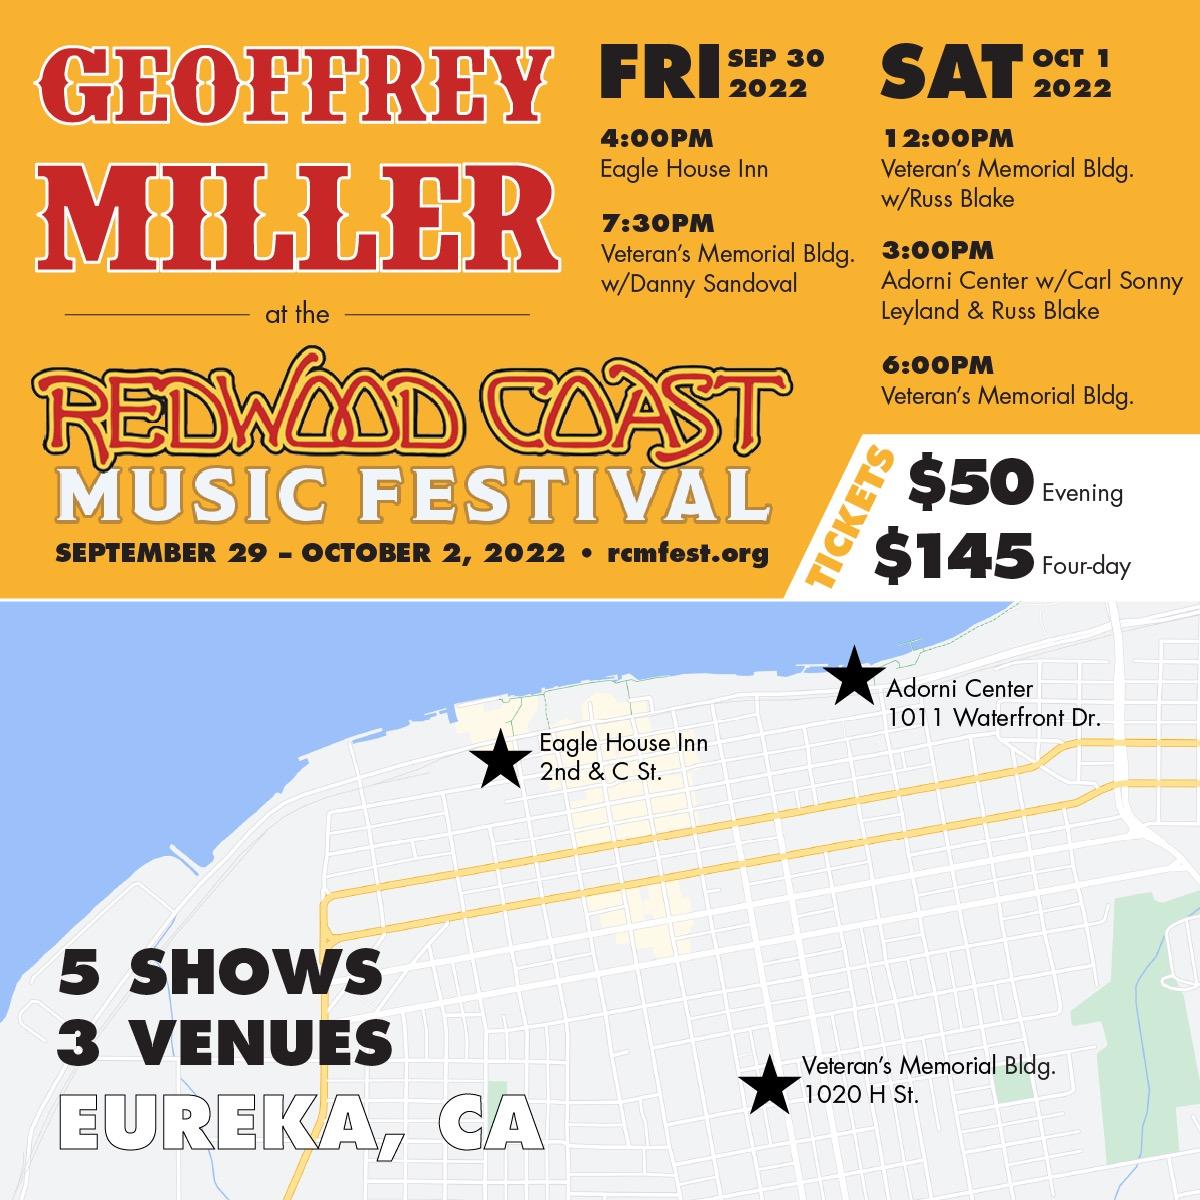 Redwood Coast Music Festival map highlighting Geoffrey Miller performances